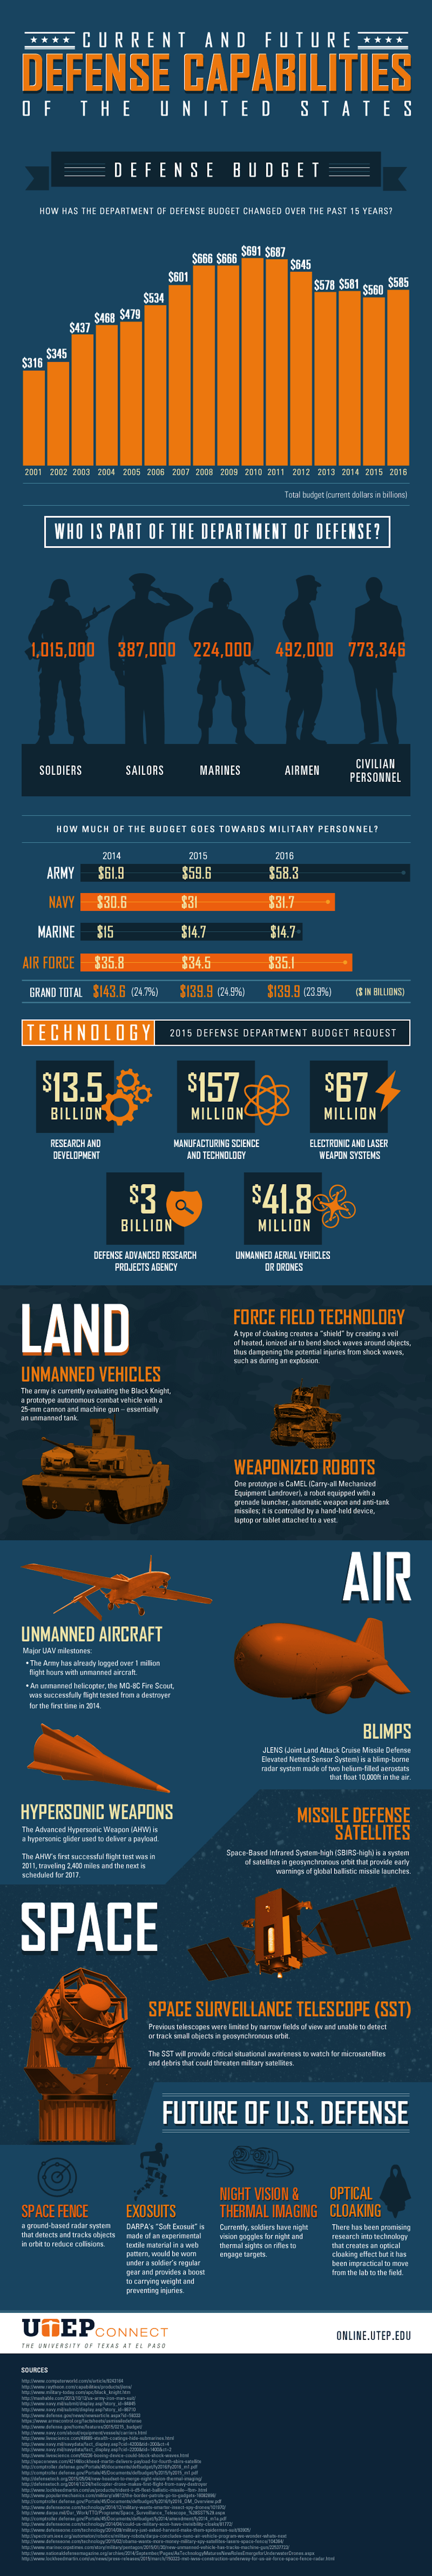 utep_defense_capabilities_infographic (1)